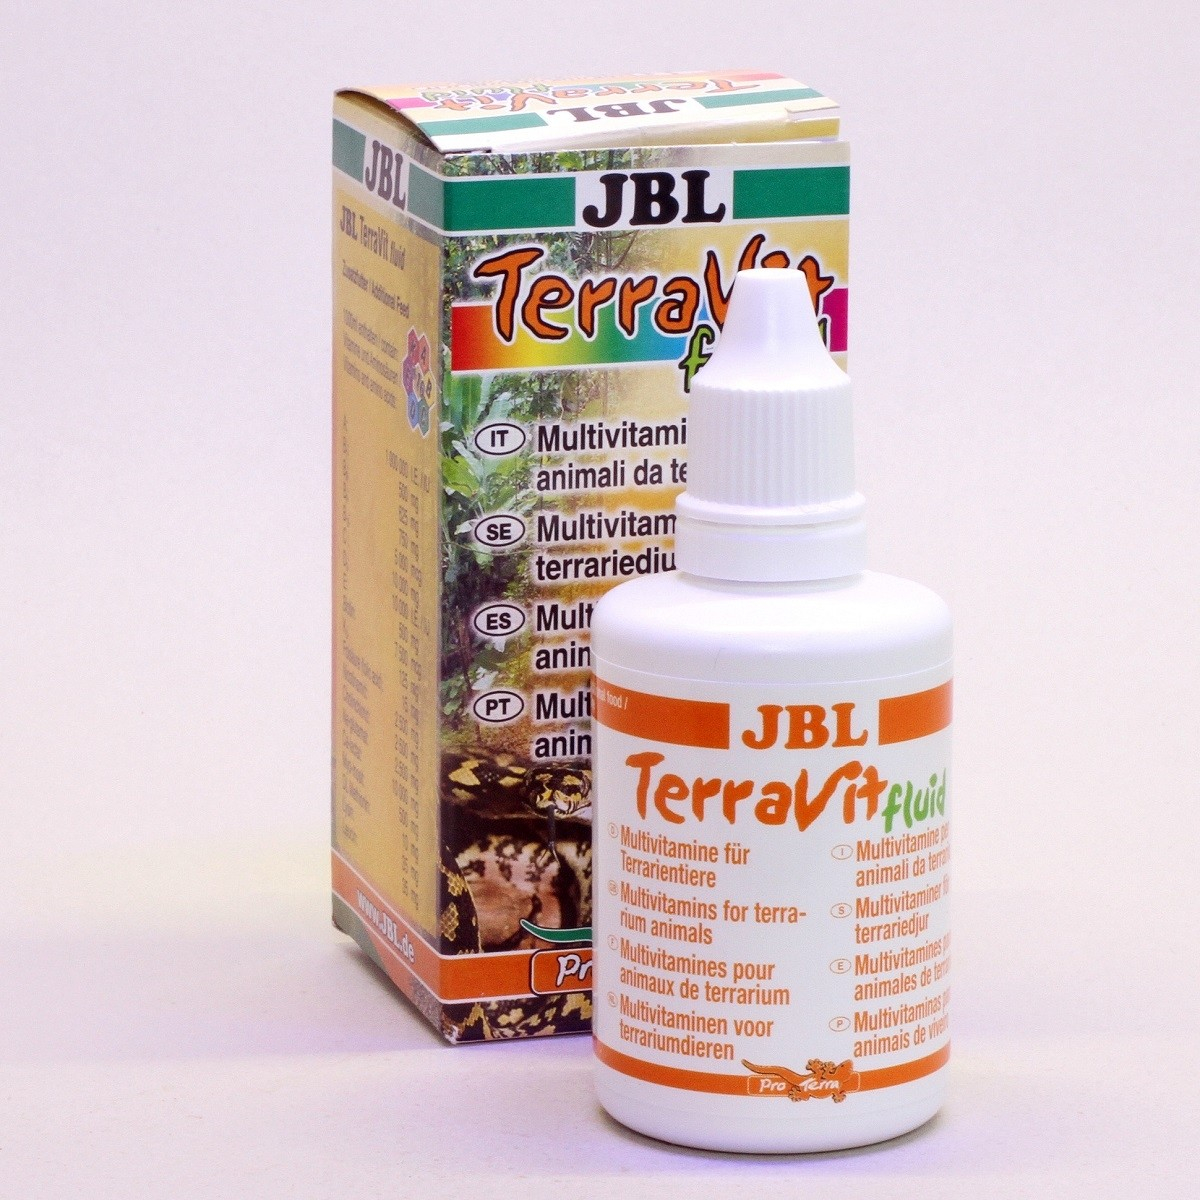 JBL TerraVit fluid Liquido multivitaminico per animali da terrario